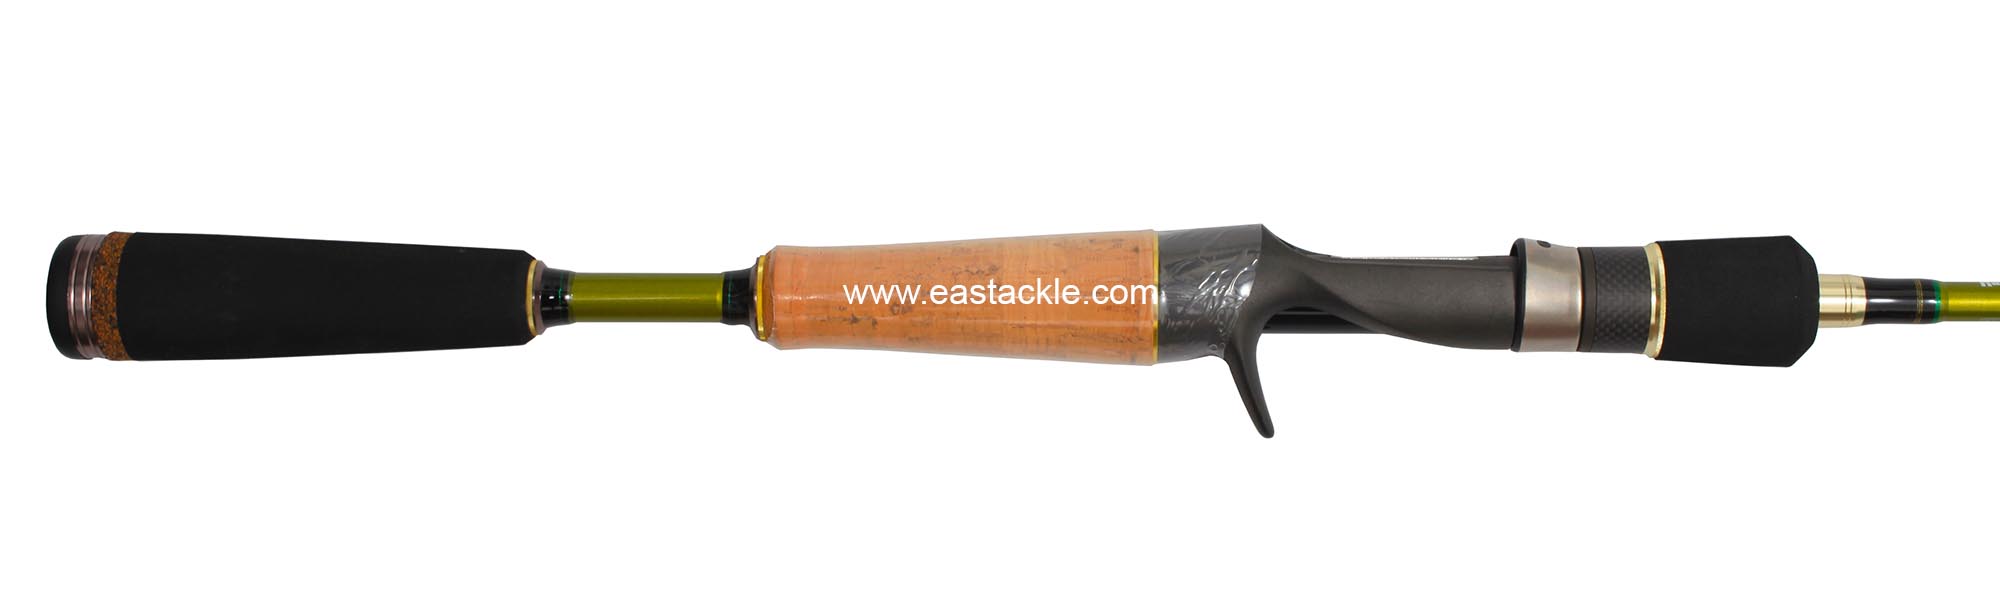 Rapala - Koivu - KVC651ML - Bait Casting Rod - Handle Section (Side View) | Eastackle